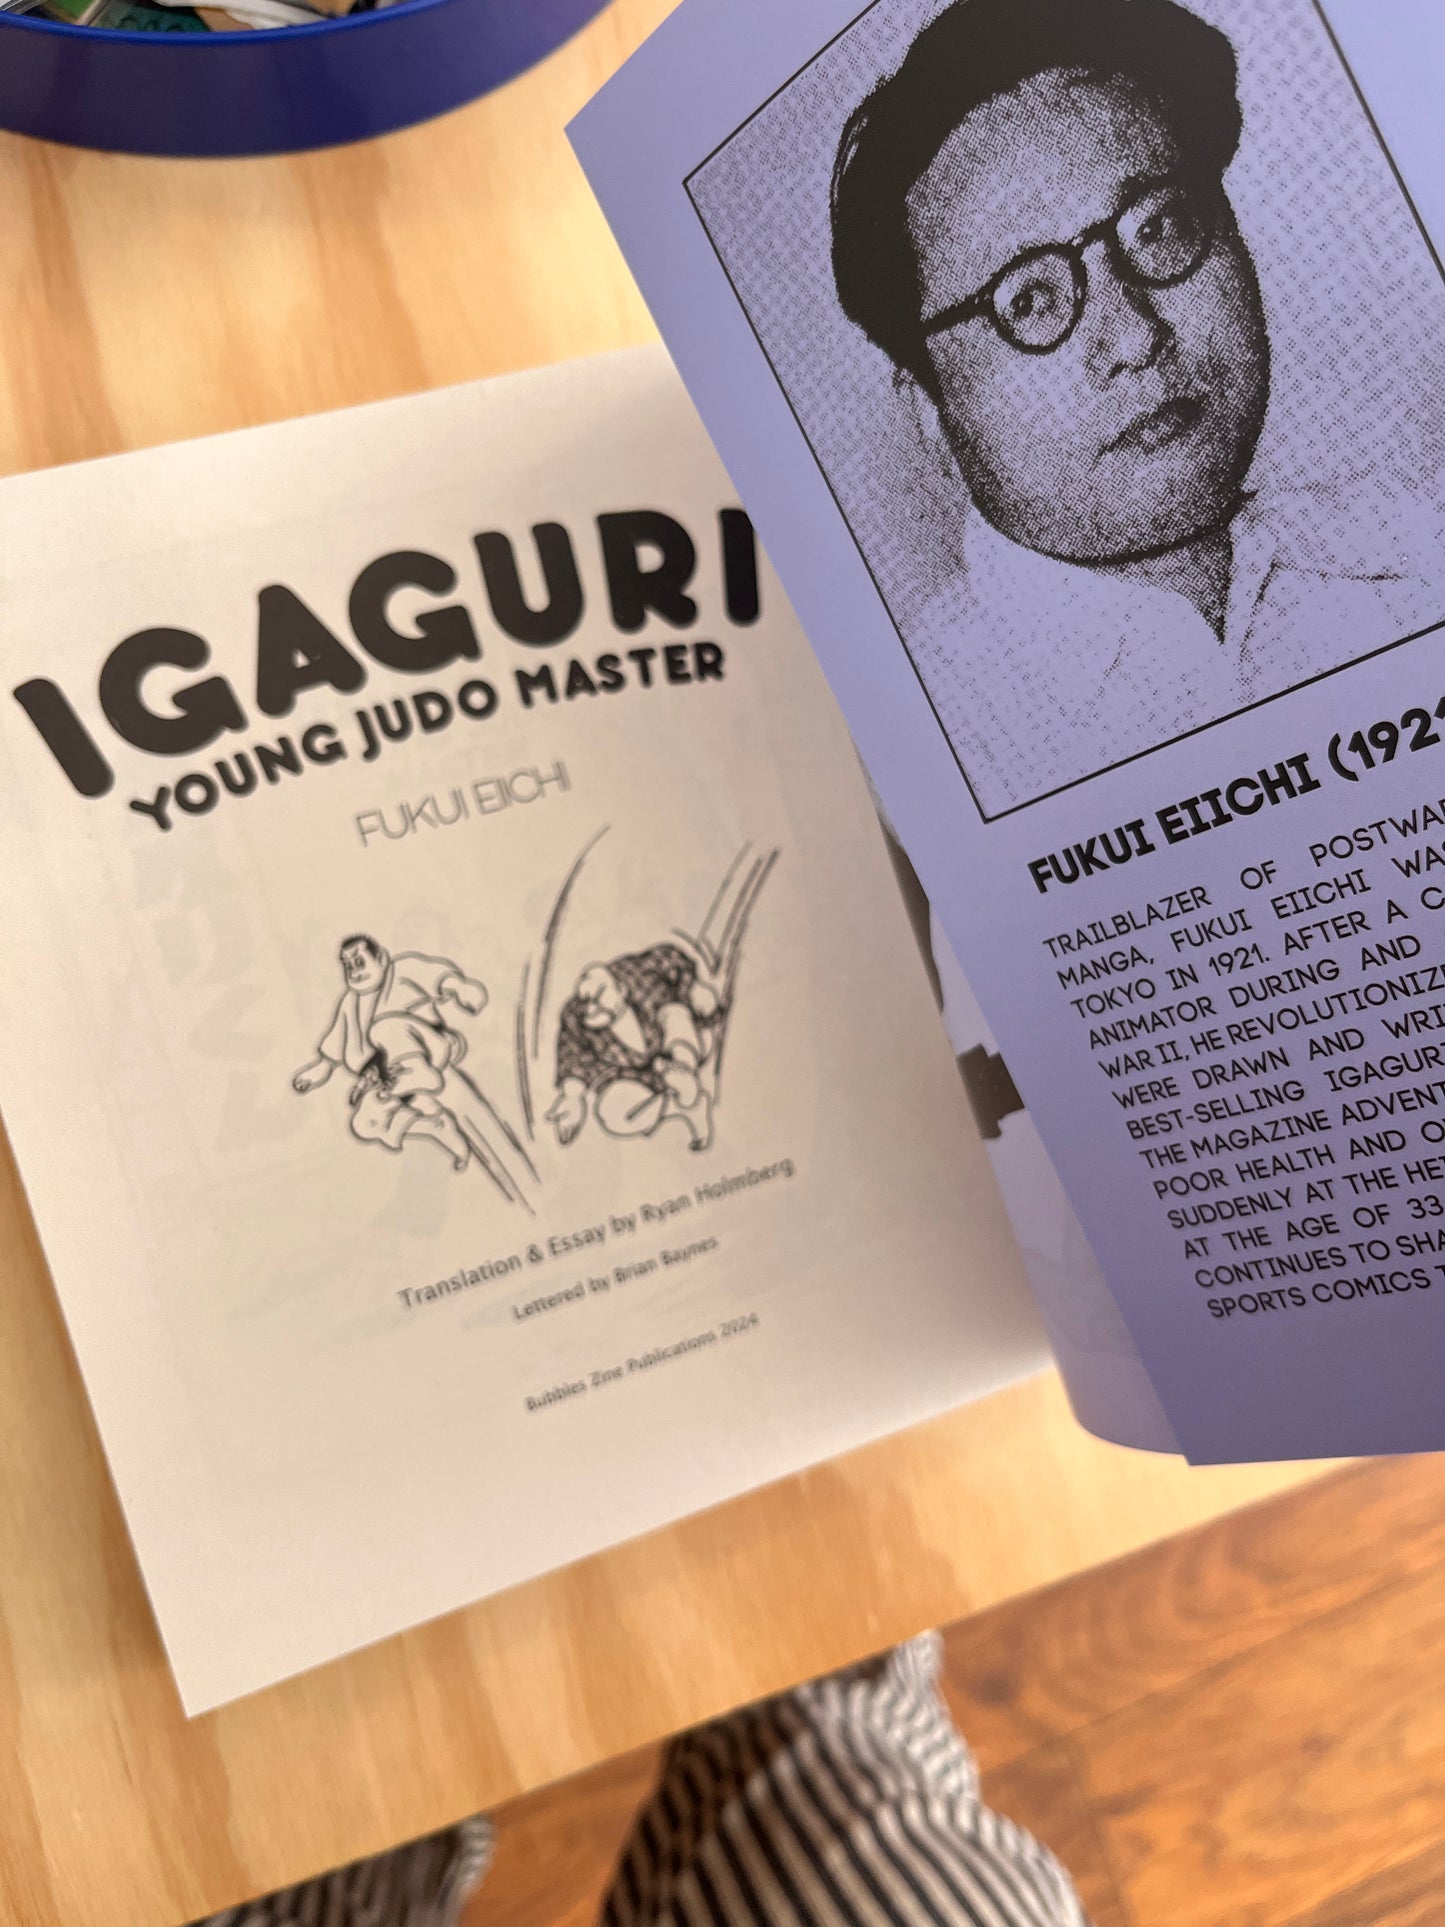 Igaguri: Young Judo Master